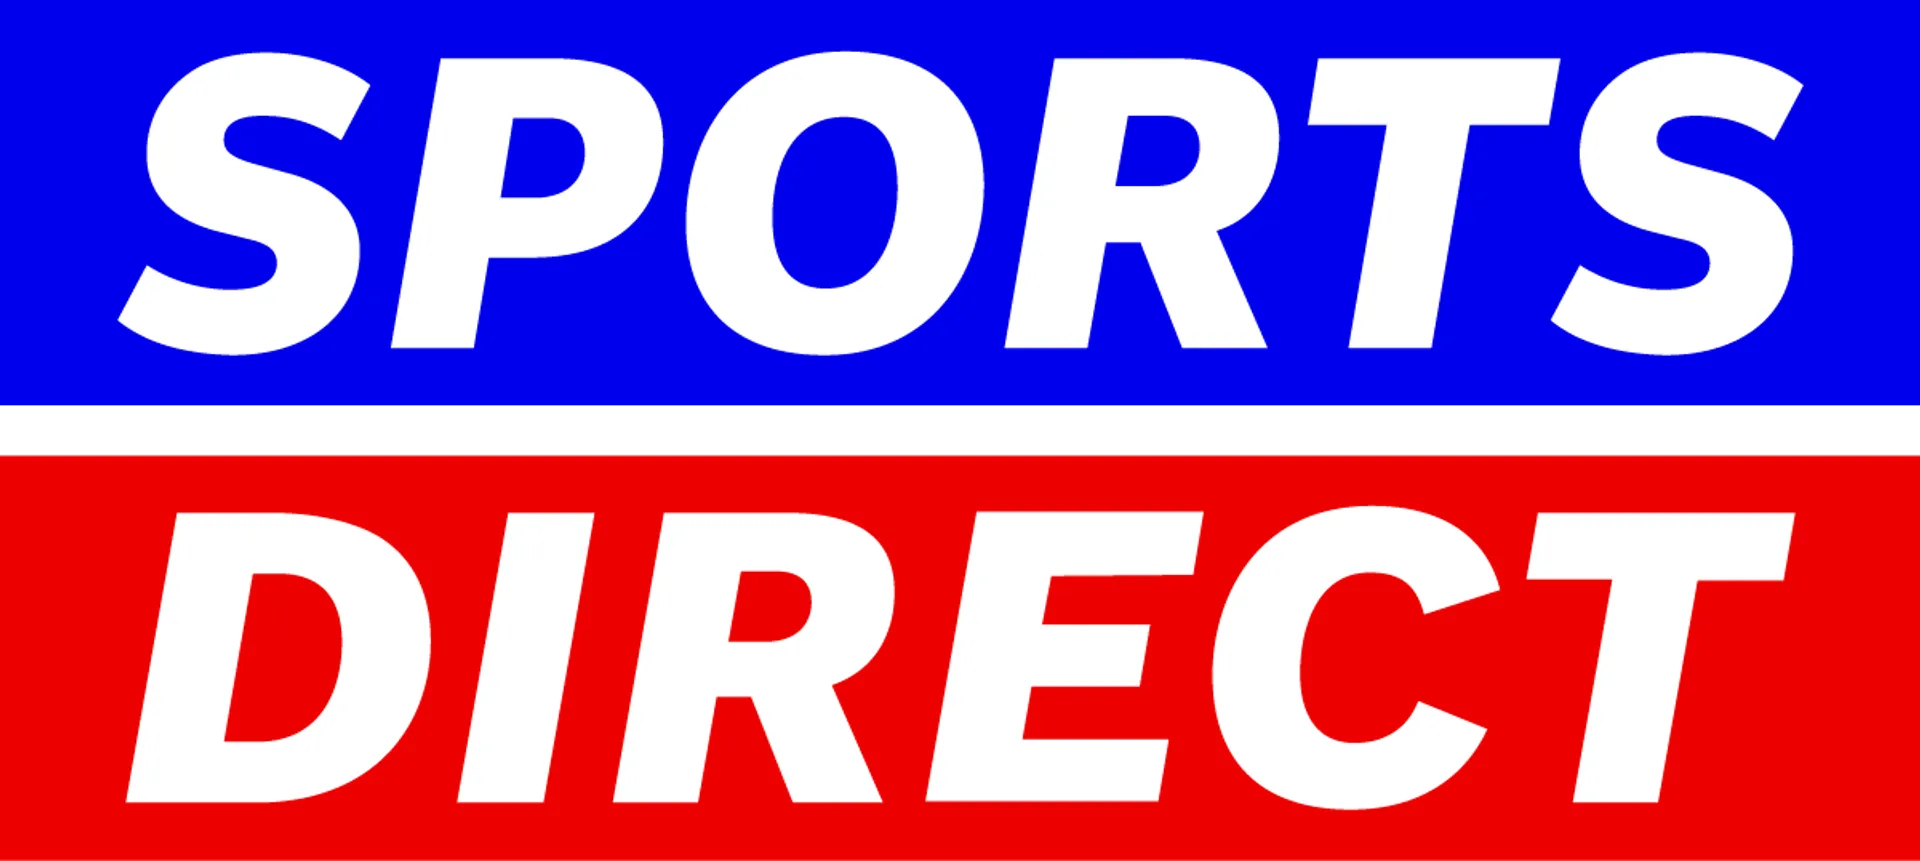 SPORTS DIRECT logo